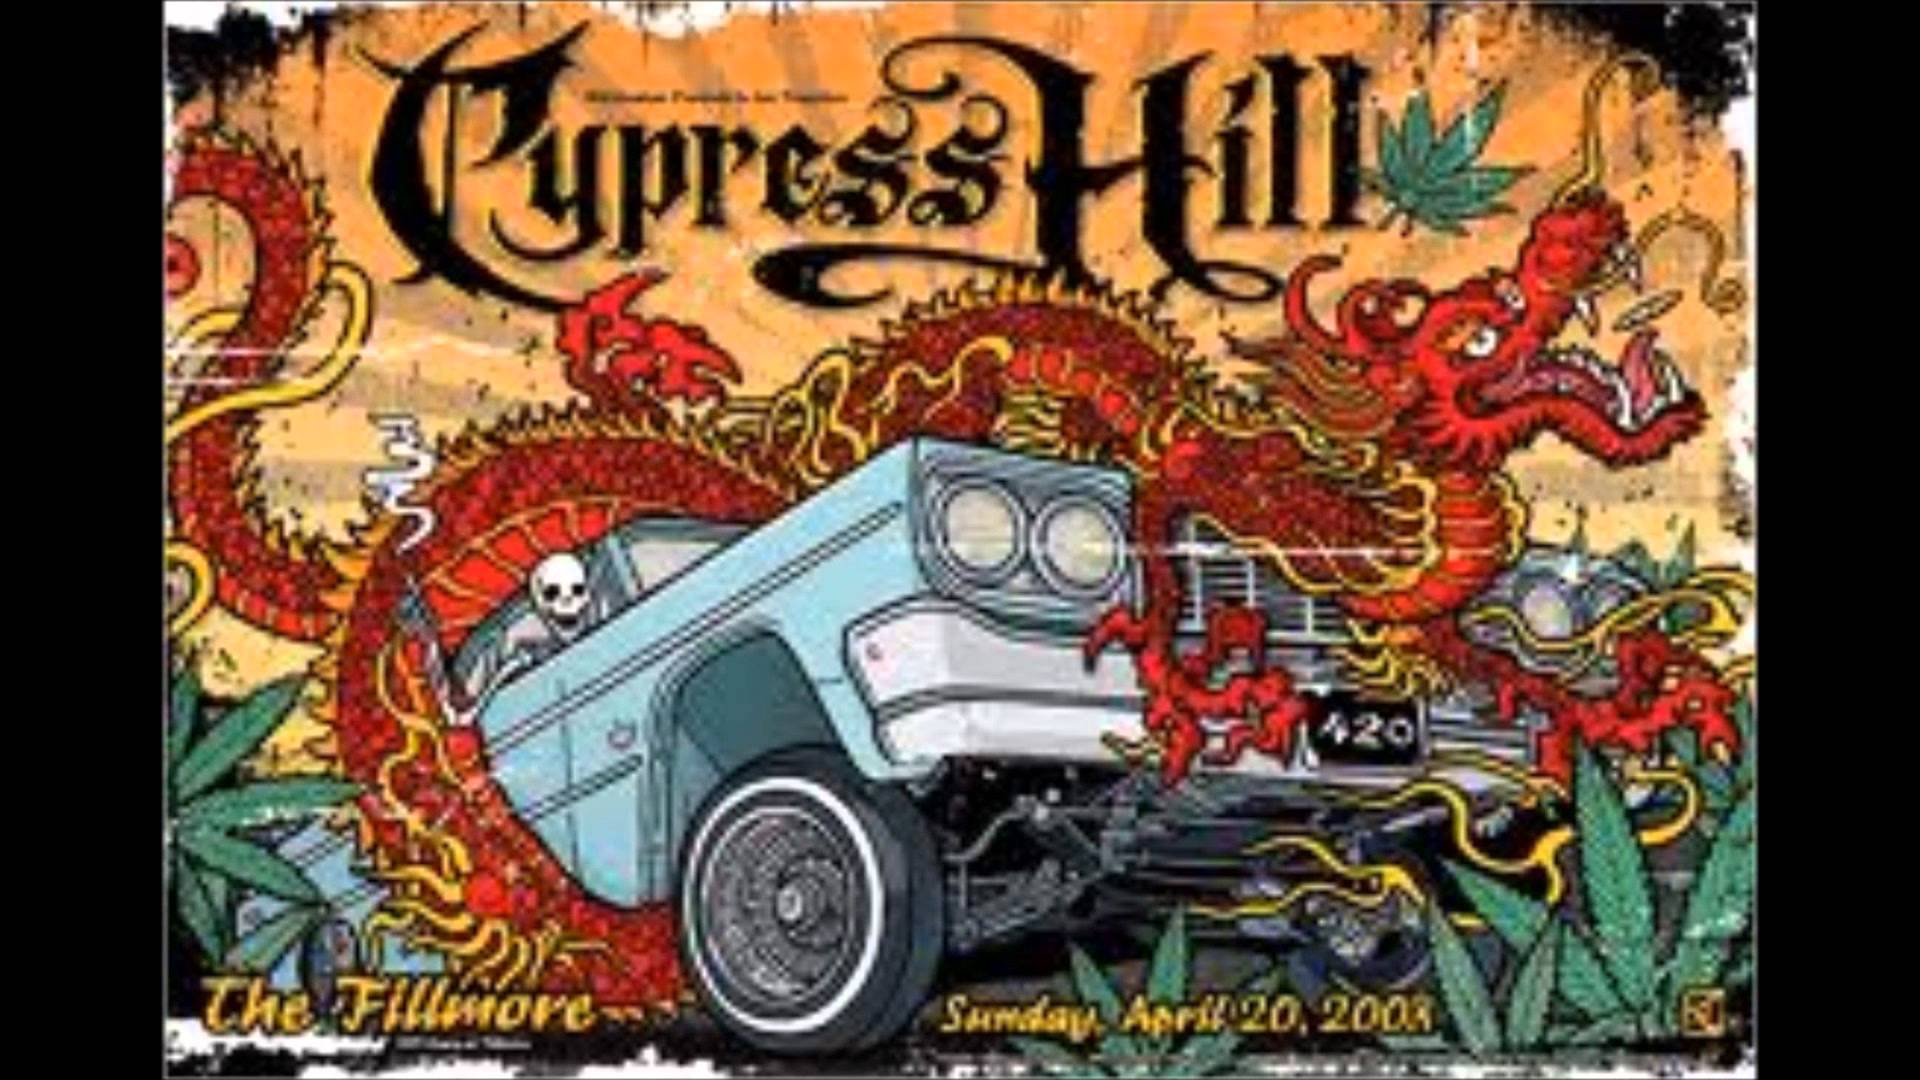 Free 1500 screensaver: Cypress hill screensaver